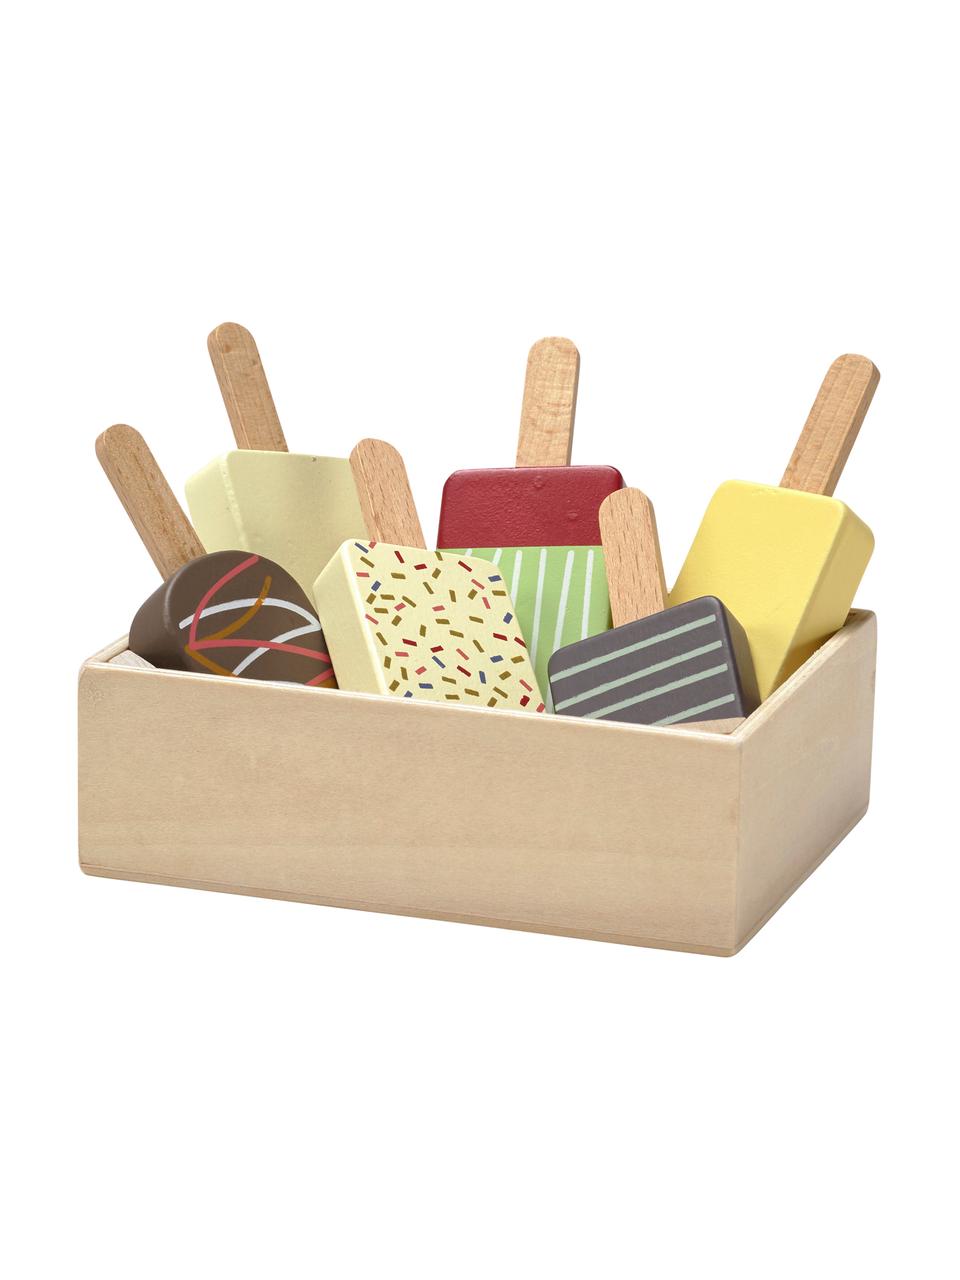 Spielzeug-Set Ice Cream, Holz, Mehrfarbig, B 9 x H 12 cm